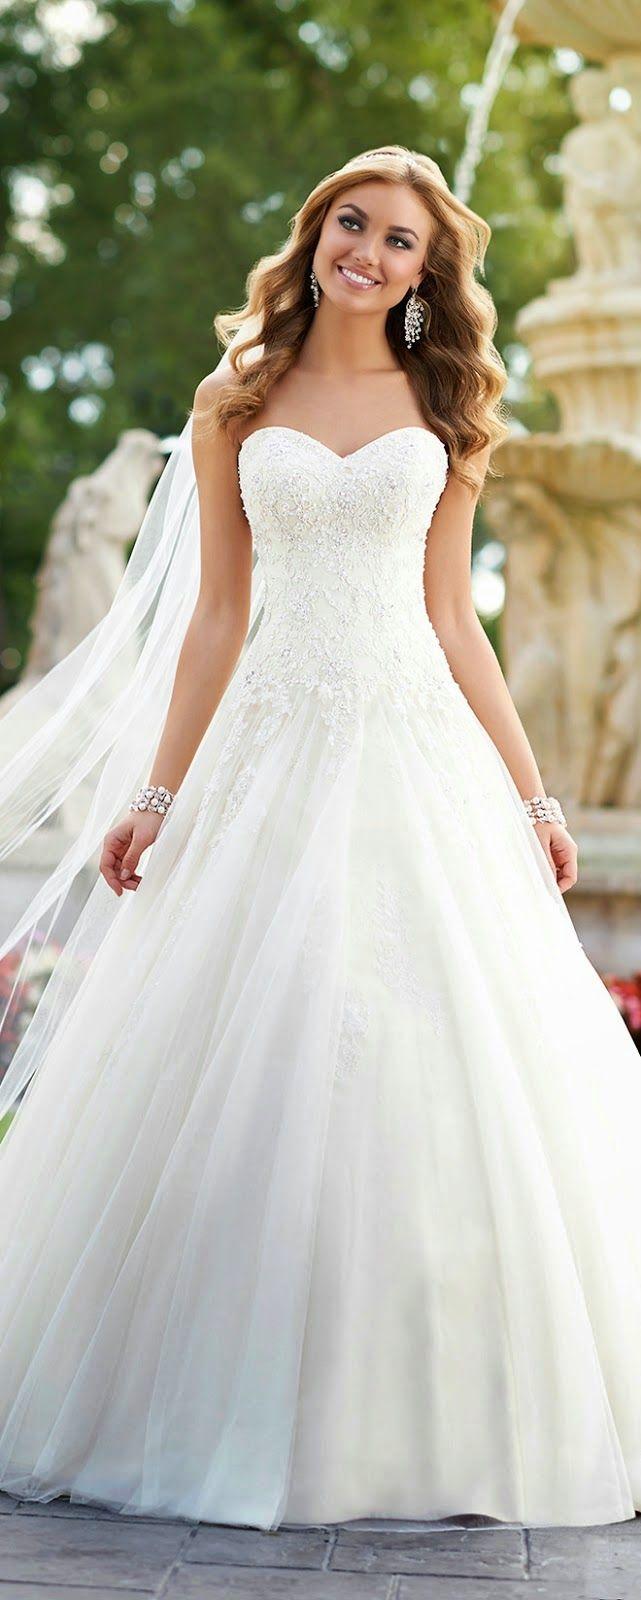 Wedding - Best Wedding Dresses Of 2014